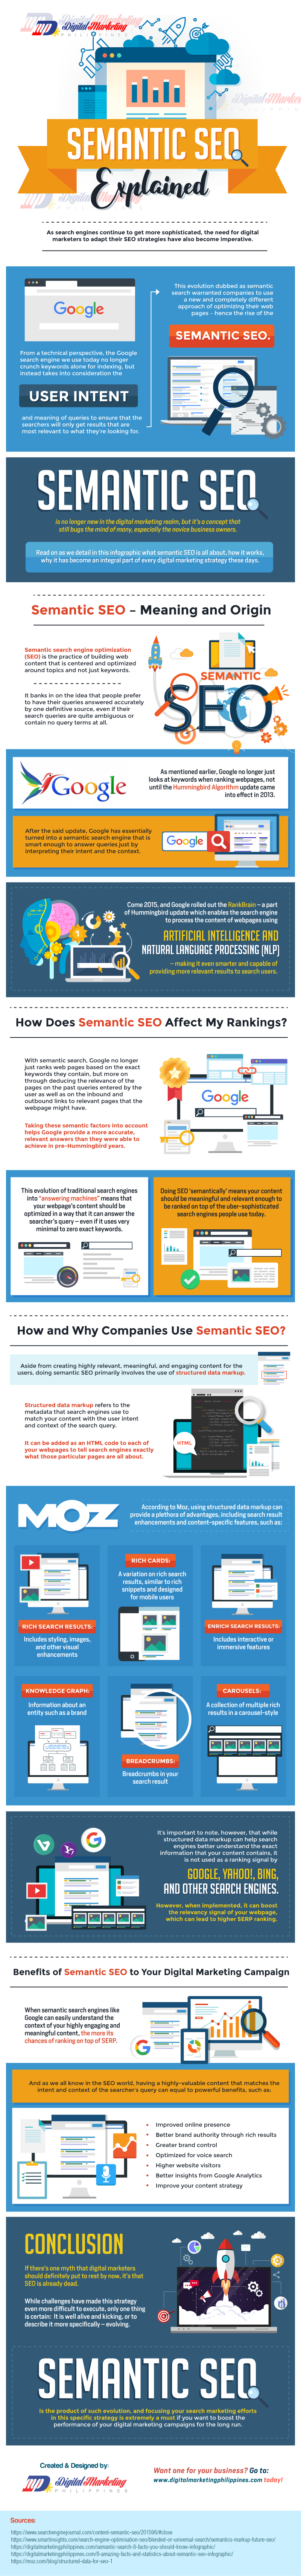 Semantic SEO Explained #infographic